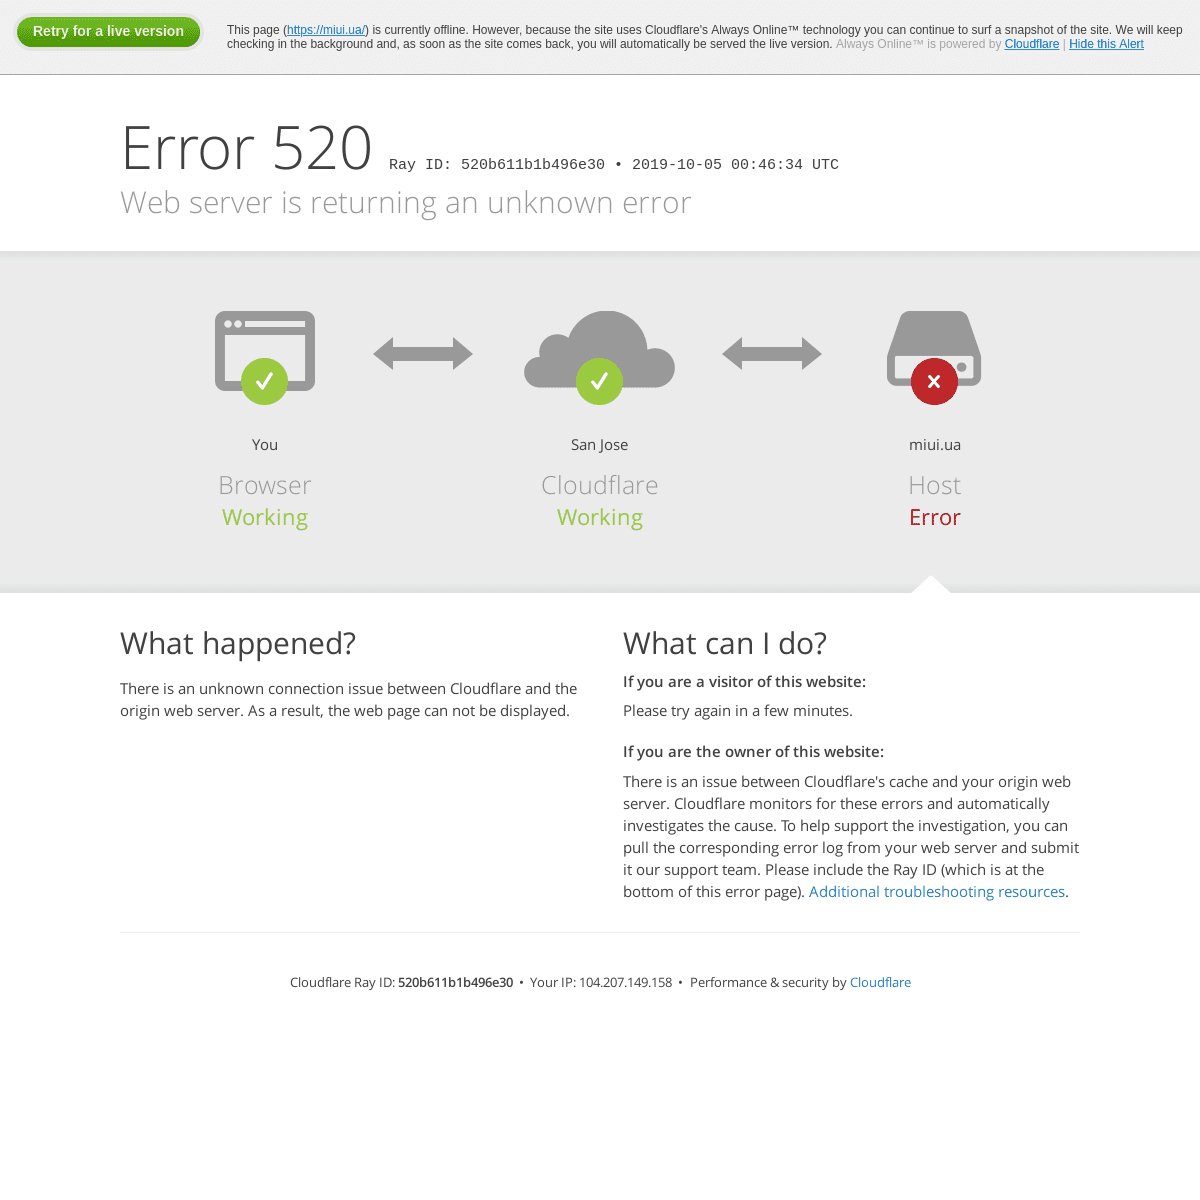 miui.ua - 520- Web server is returning an unknown error